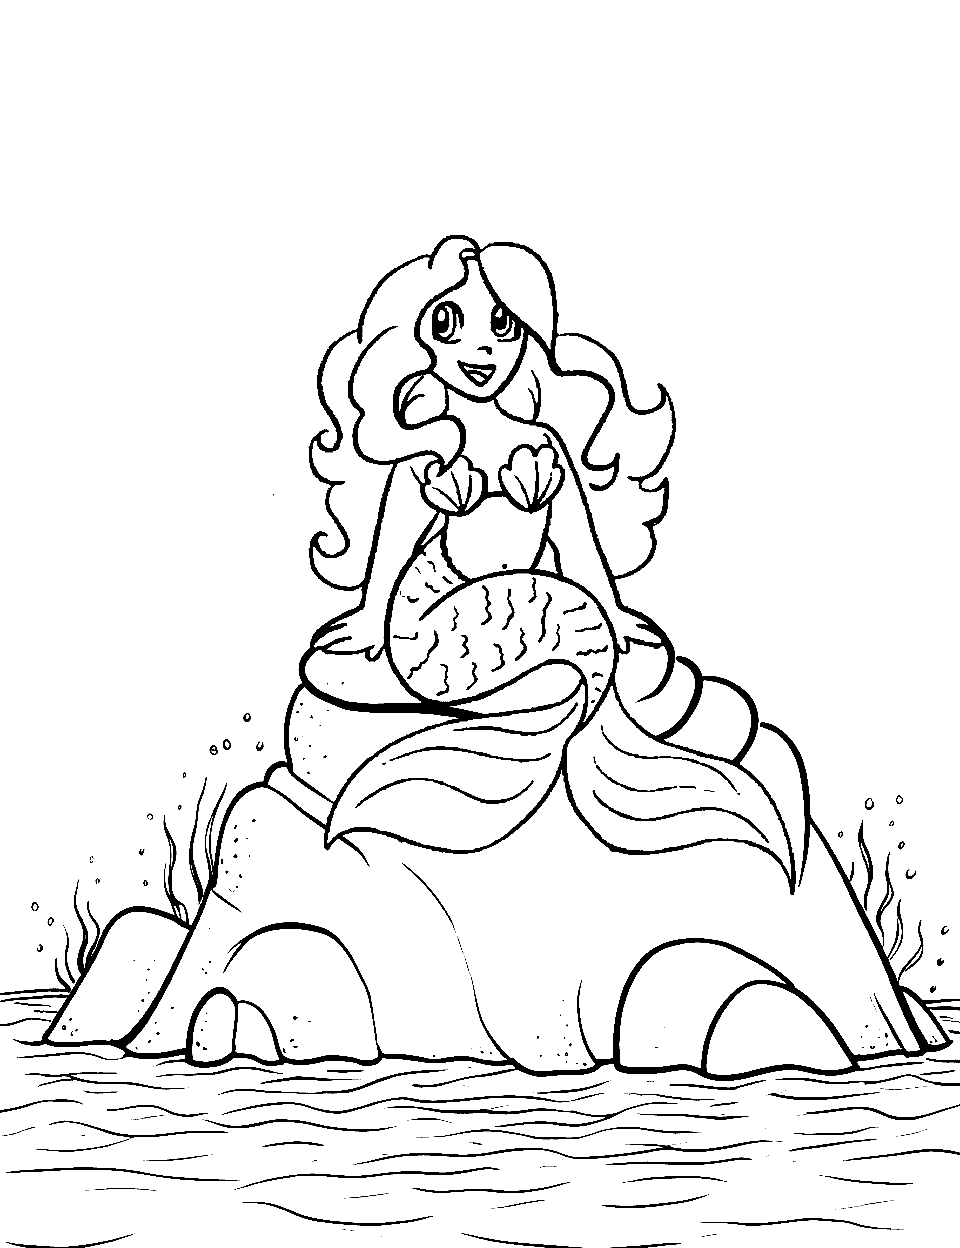 Mermaid Sitting on a Rock Ocean Coloring Page - A mermaid sitting on a rock, with the ocean around her.